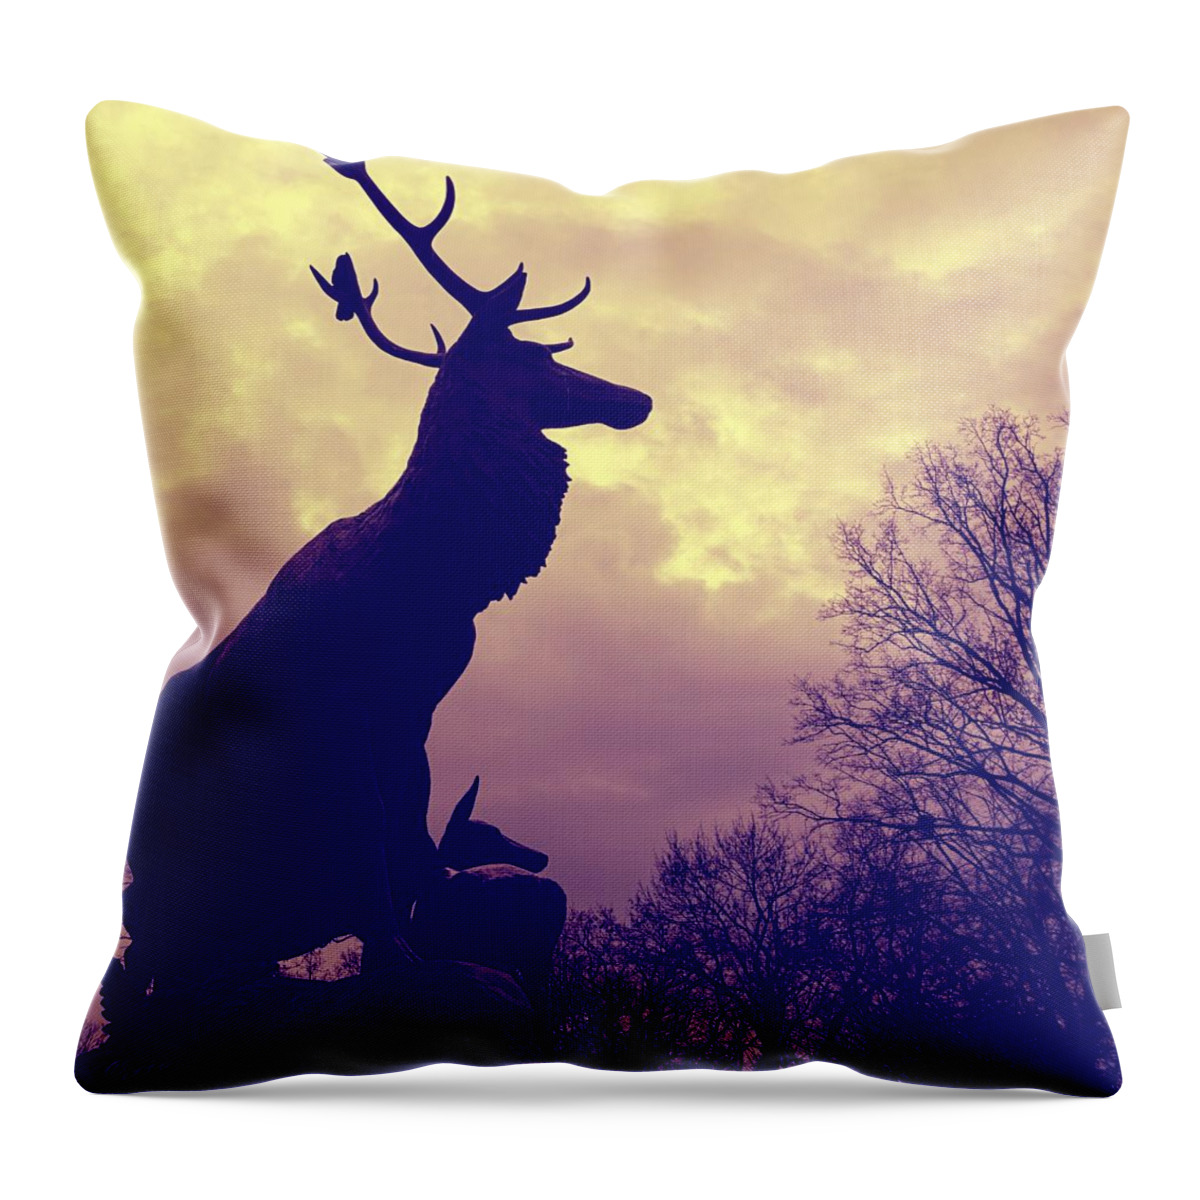 Deer Throw Pillow featuring the photograph Majestic Deer at Parc de Sceaux by Aurella FollowMyFrench